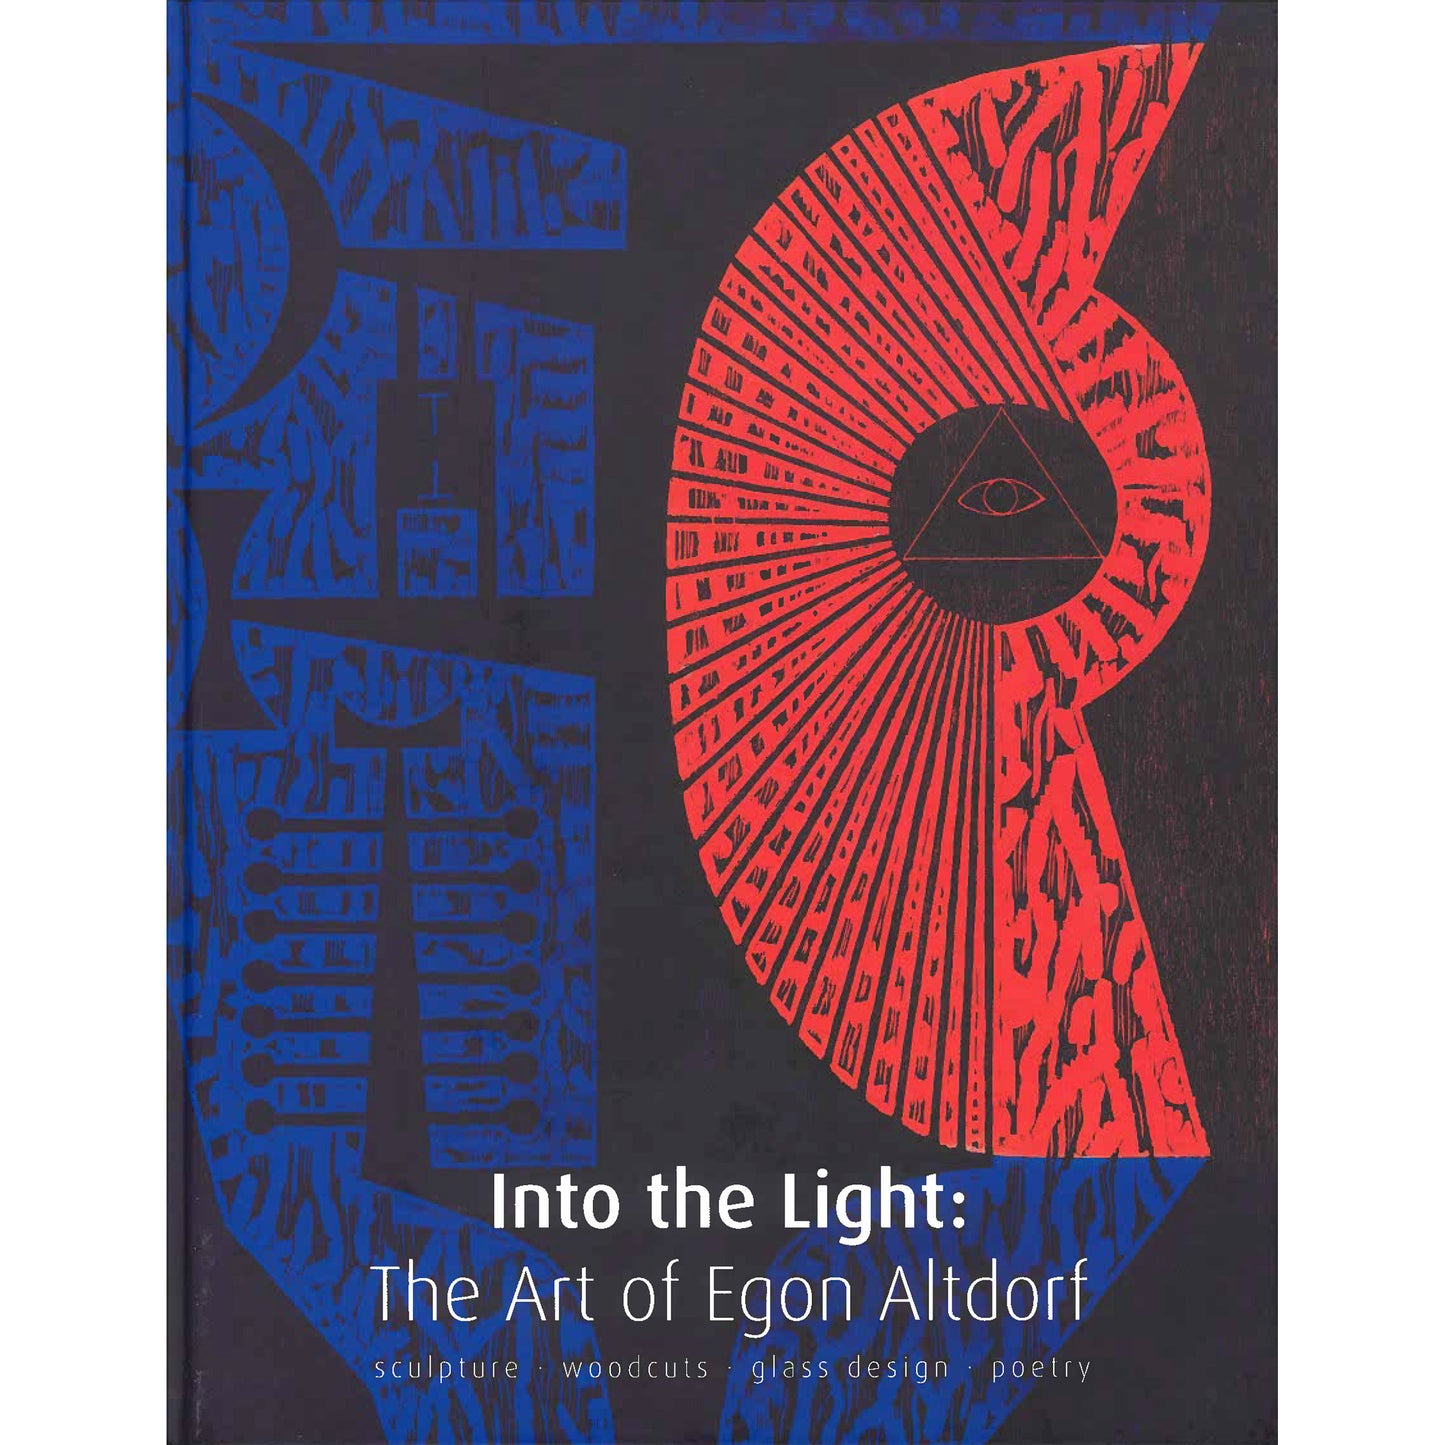 Into the Light: the Art of Egon Altdorf